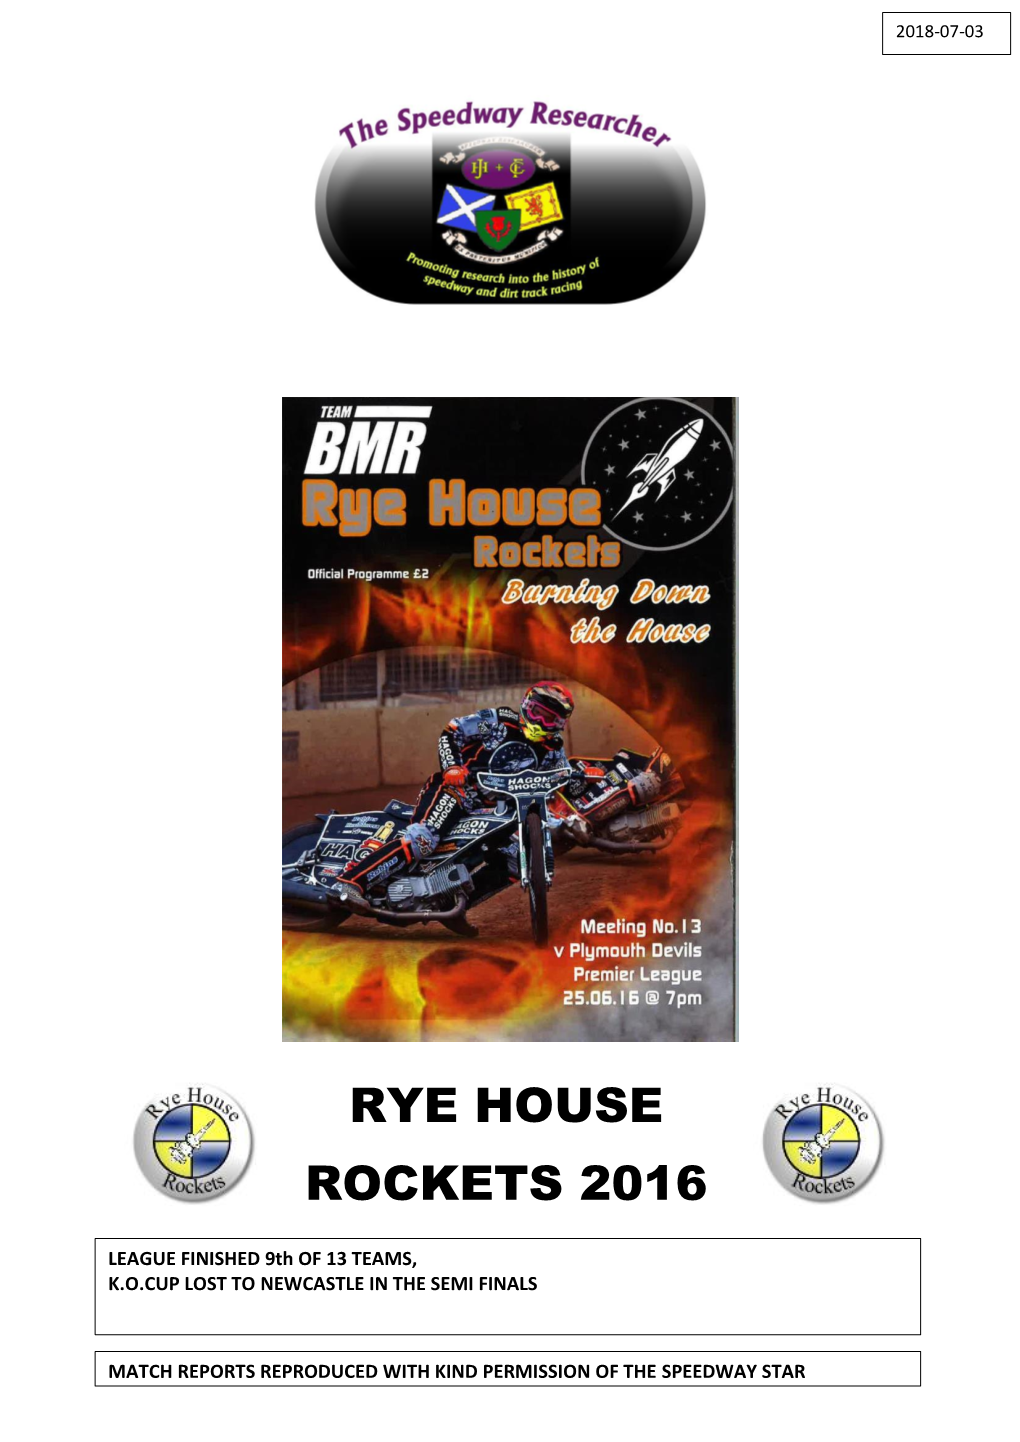 Rye House Rockets 2016